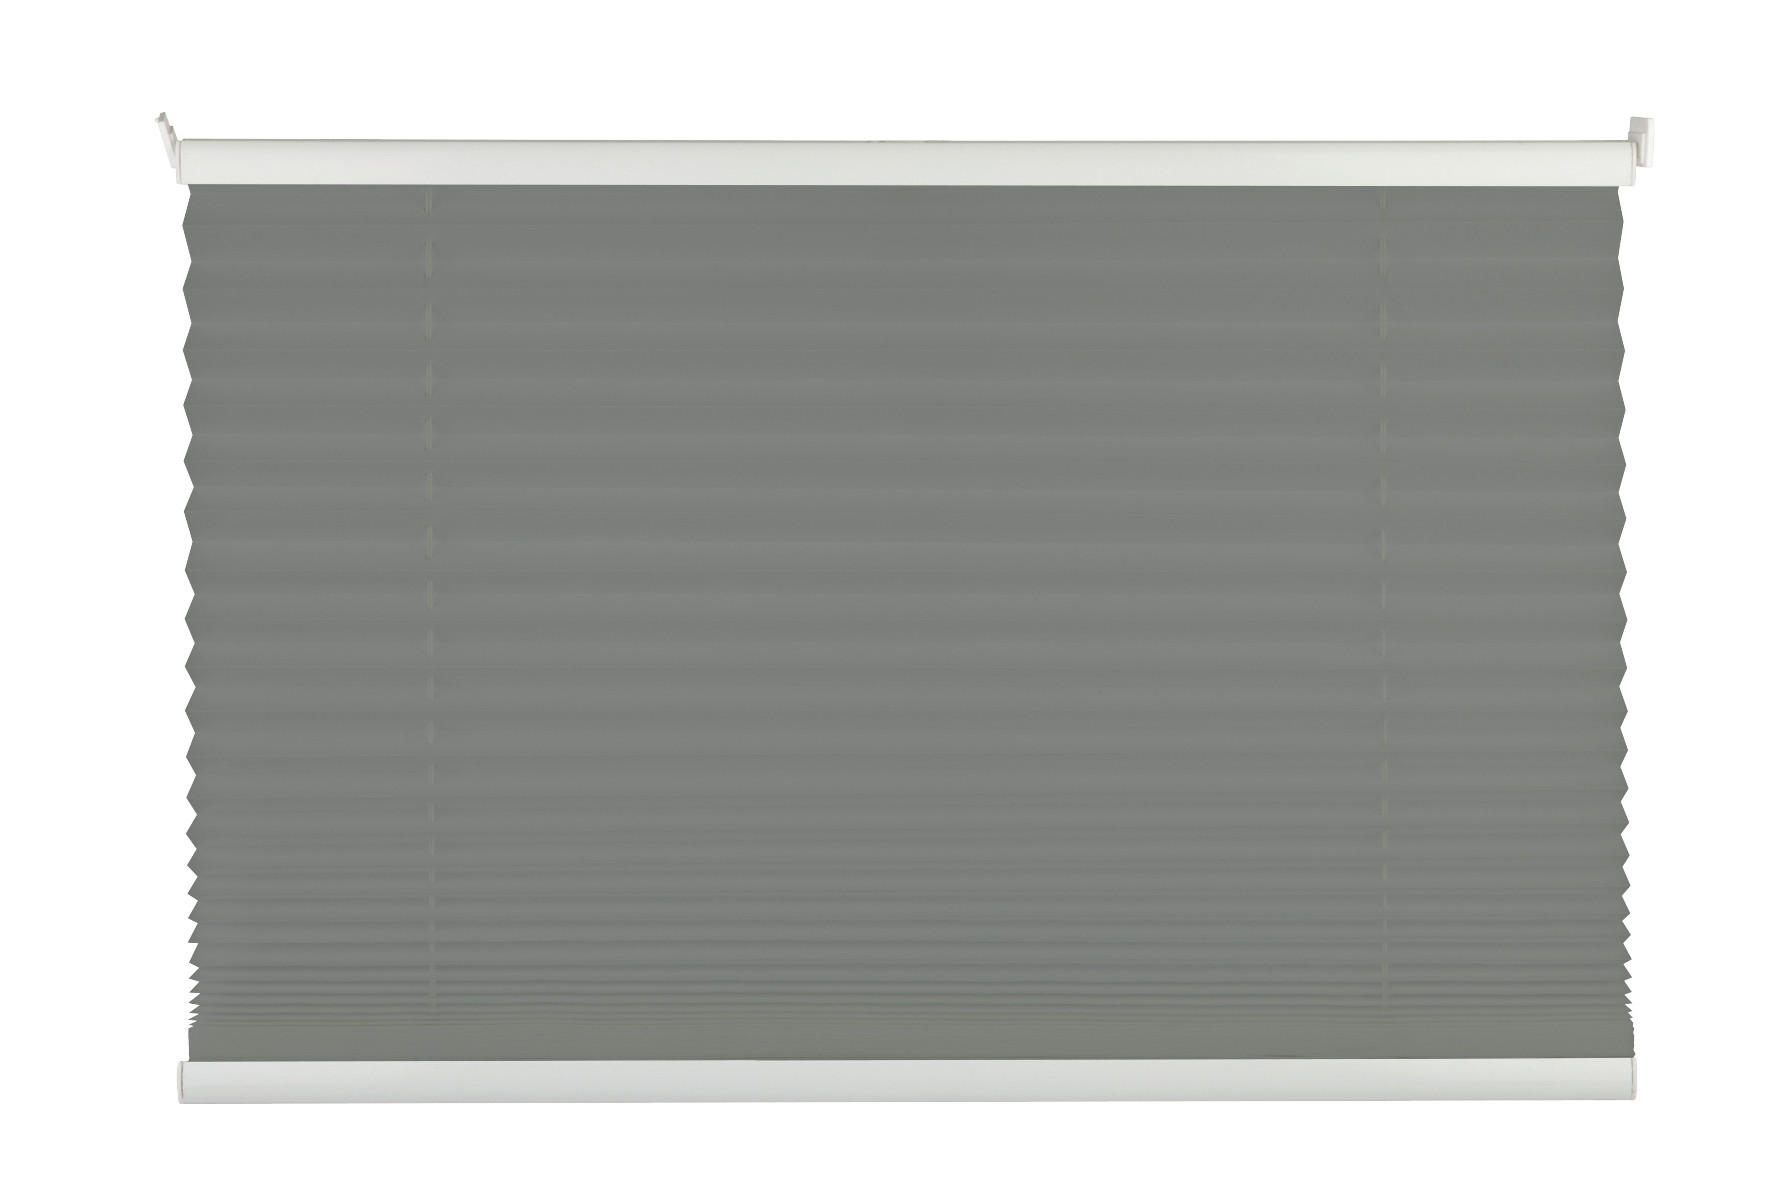 PLISSEE 60/130 cm  - Hellgrau, Design, Textil (60/130cm) - Homeware